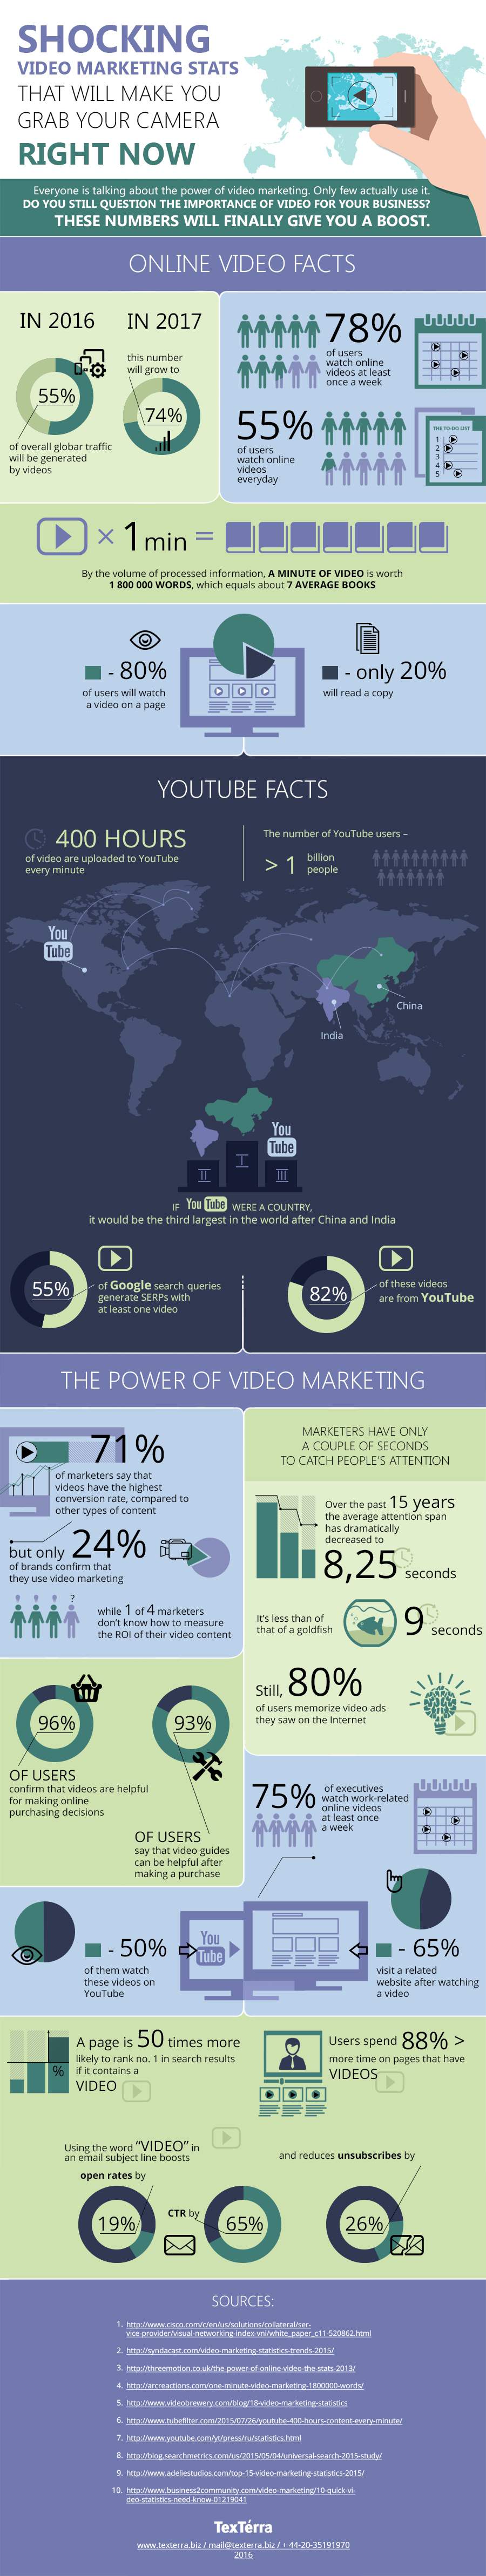 Video Marketing Stats